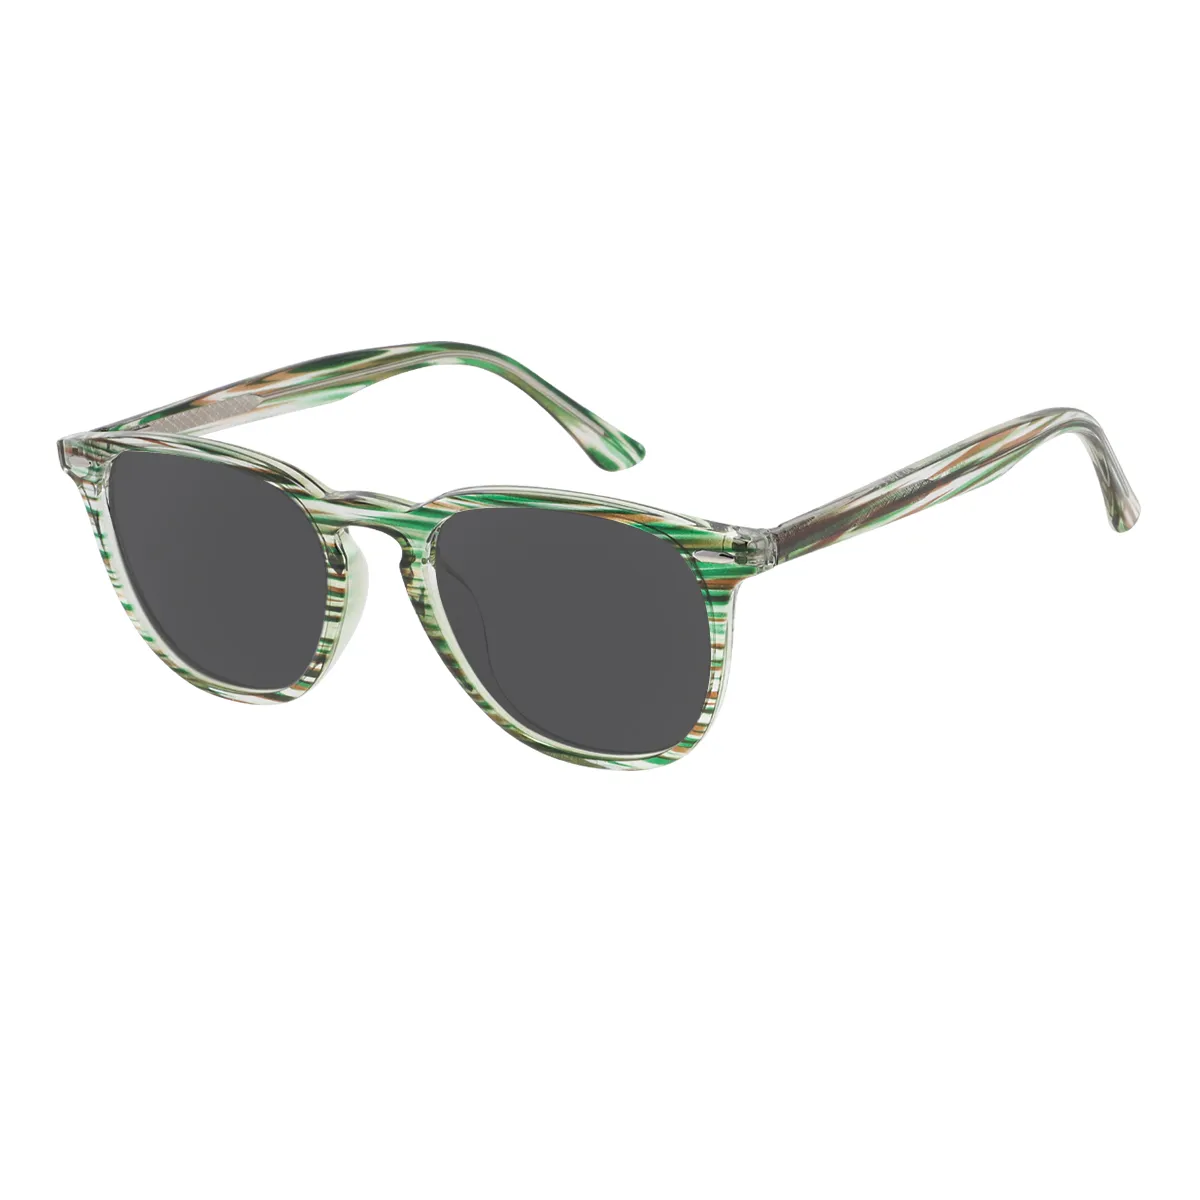 Dobbins - Square Green Sunglasses for Men & Women